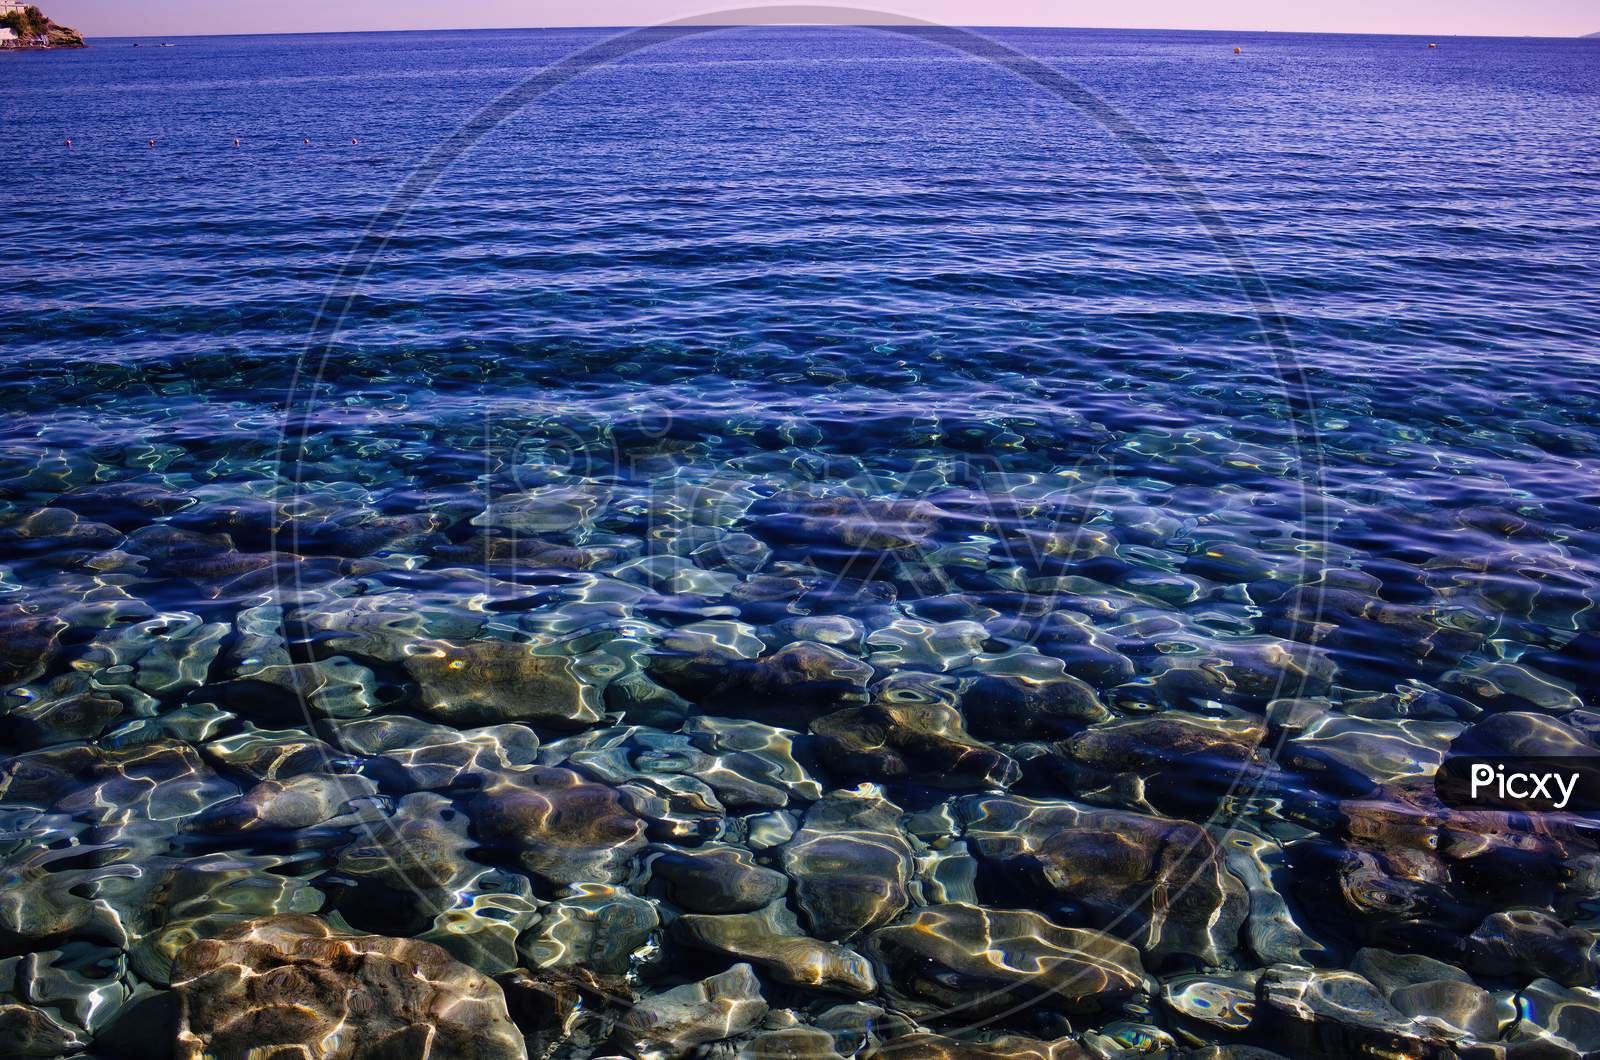 Crete Island, Greece: Clean See Through Transparent Water Of Mediterranean Sea With Gentle Waves.